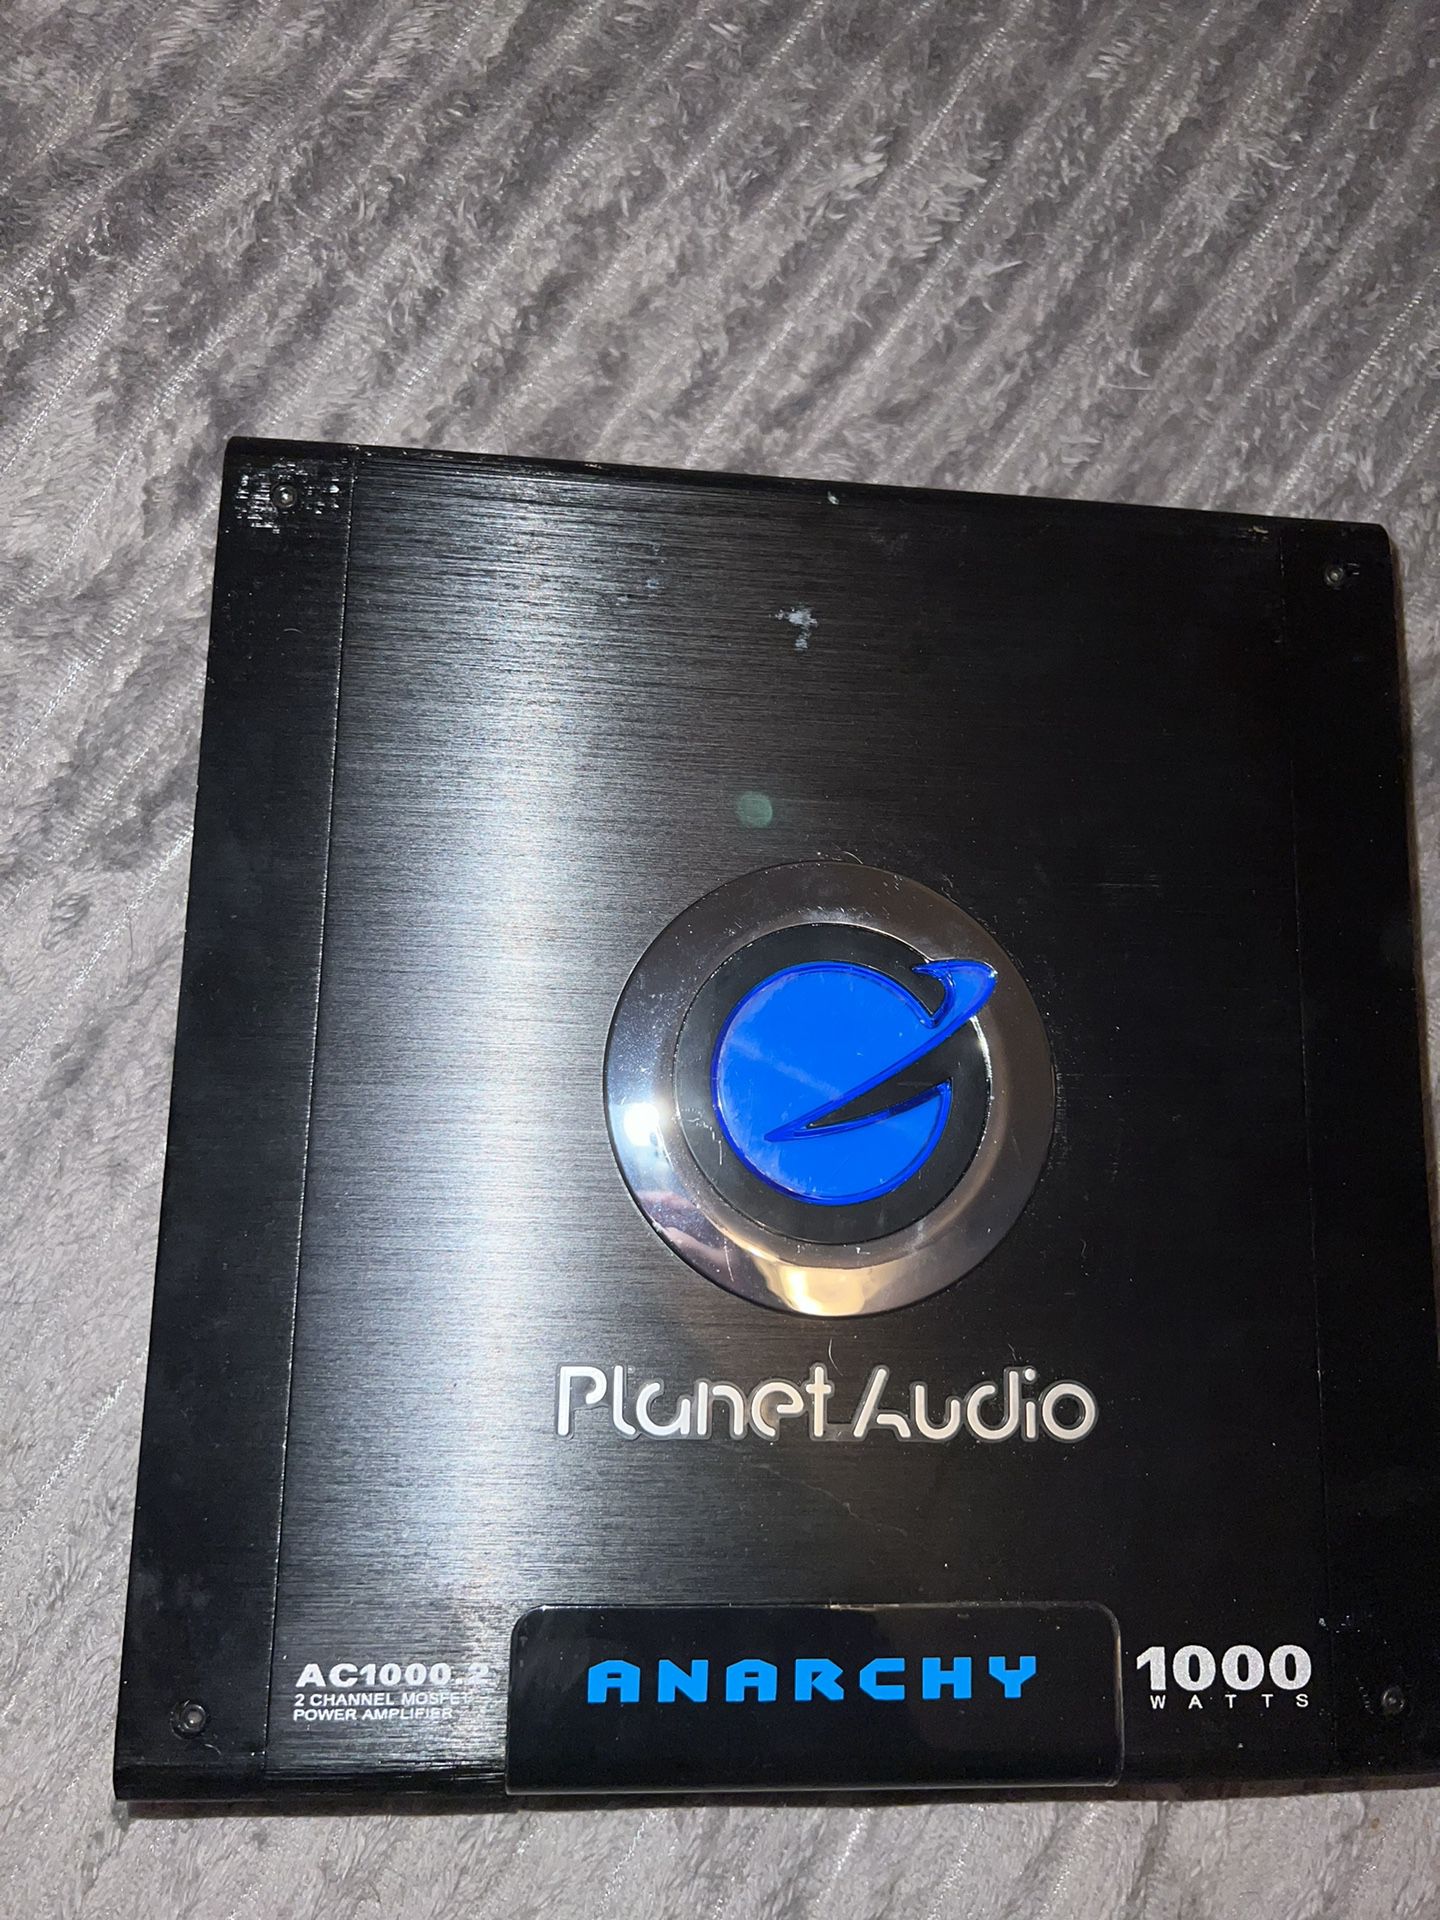 Planet Audio ac1000.2 anarchy Car Amplifier 